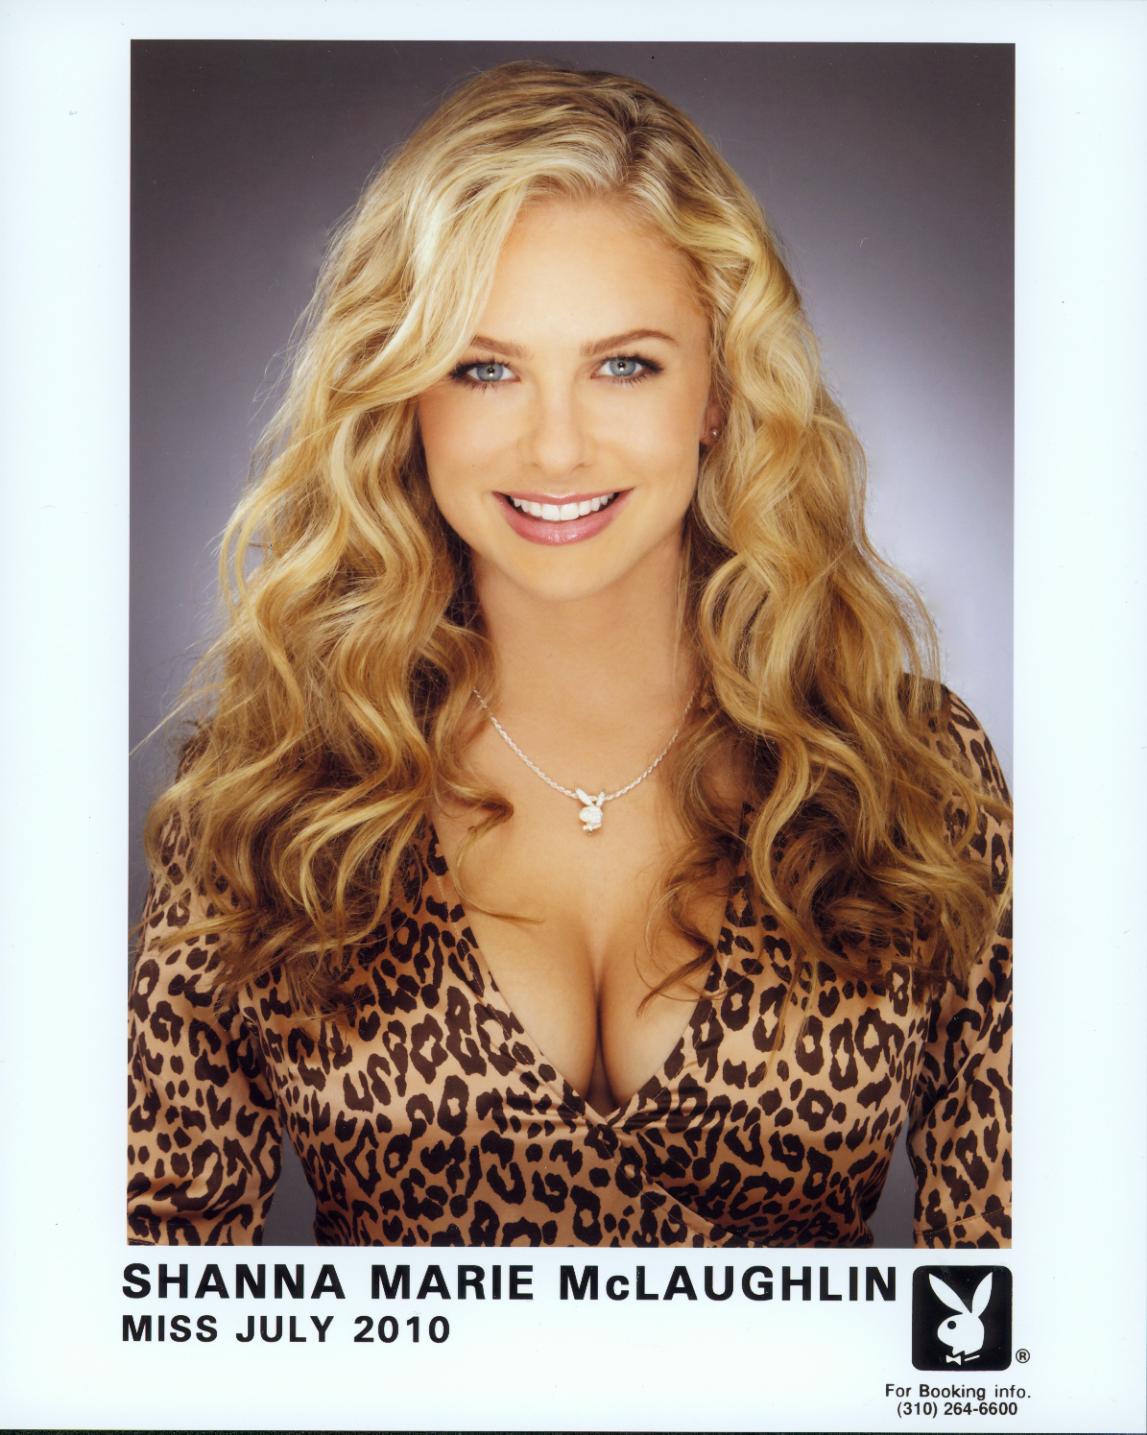 Shanna Marie McLaughlin Set to